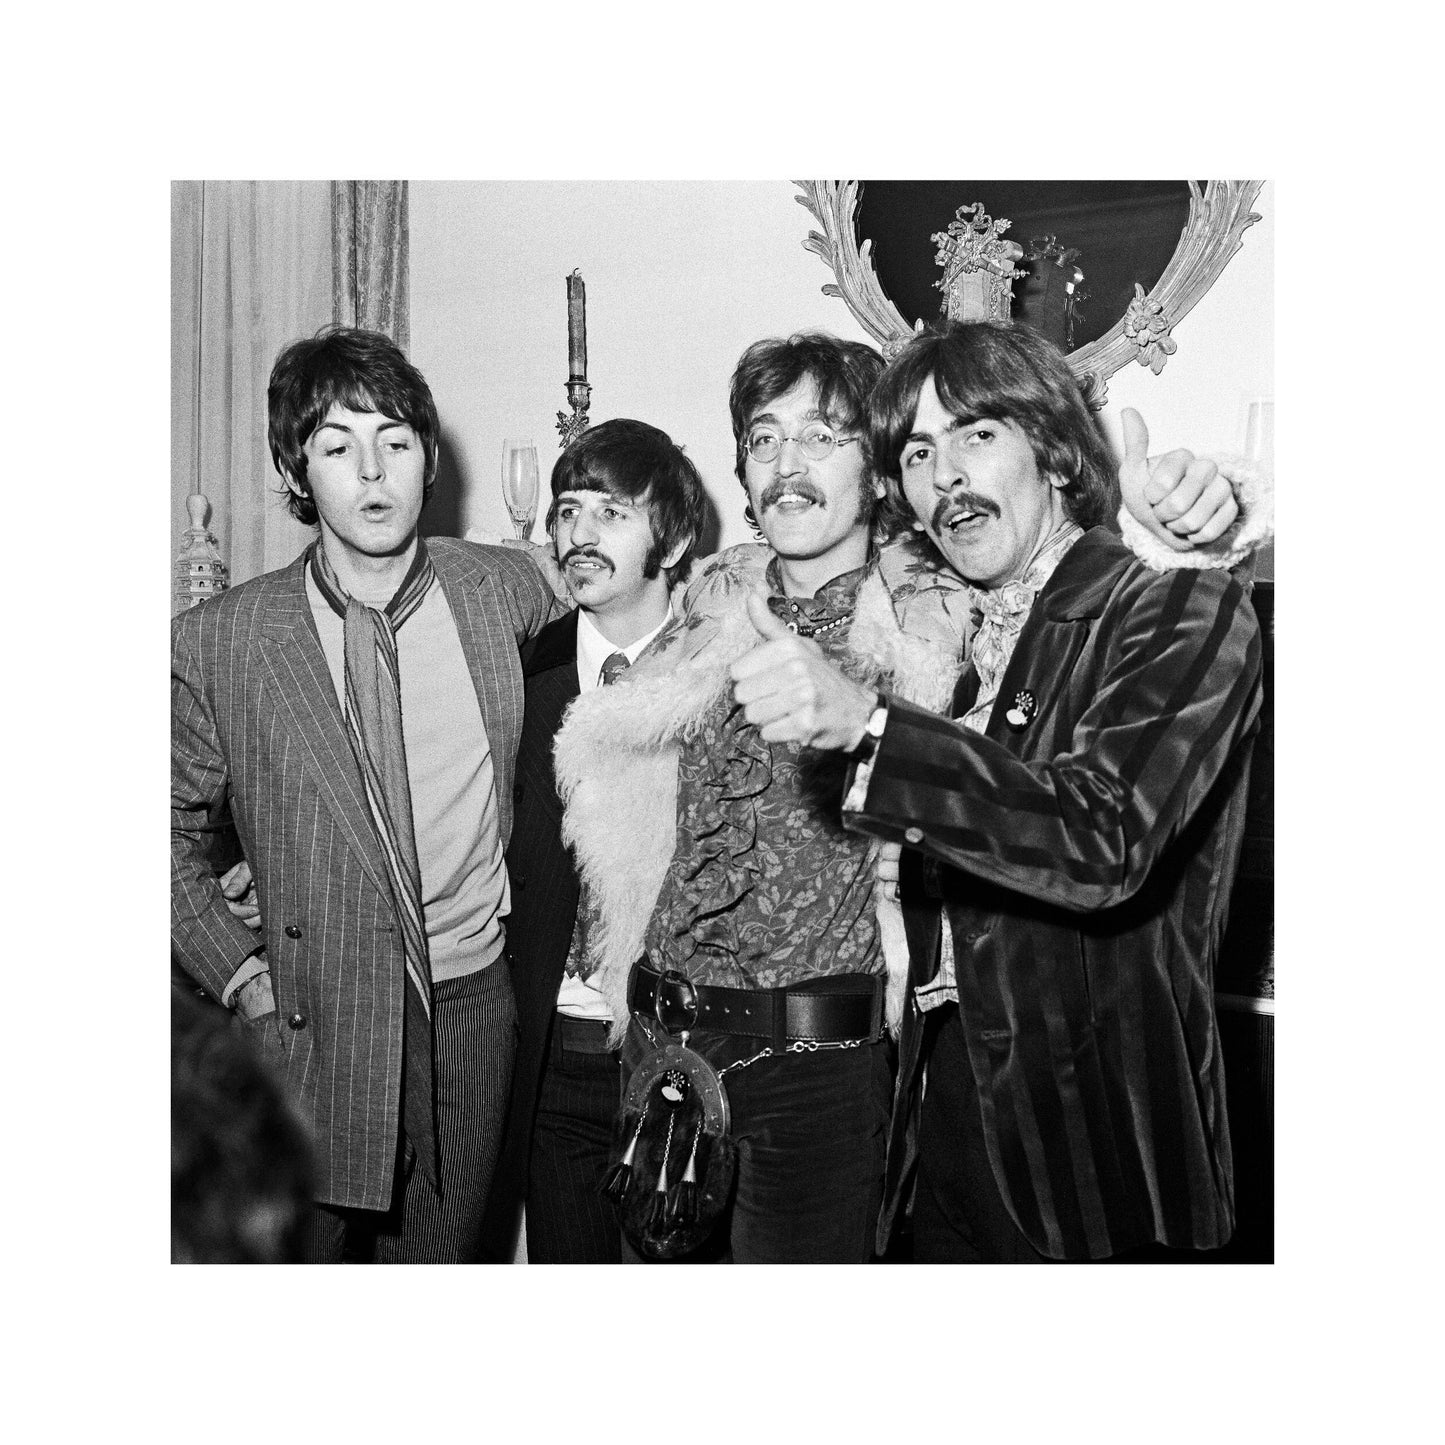 The Beatles - Band Celebrating, England, 1967 Print